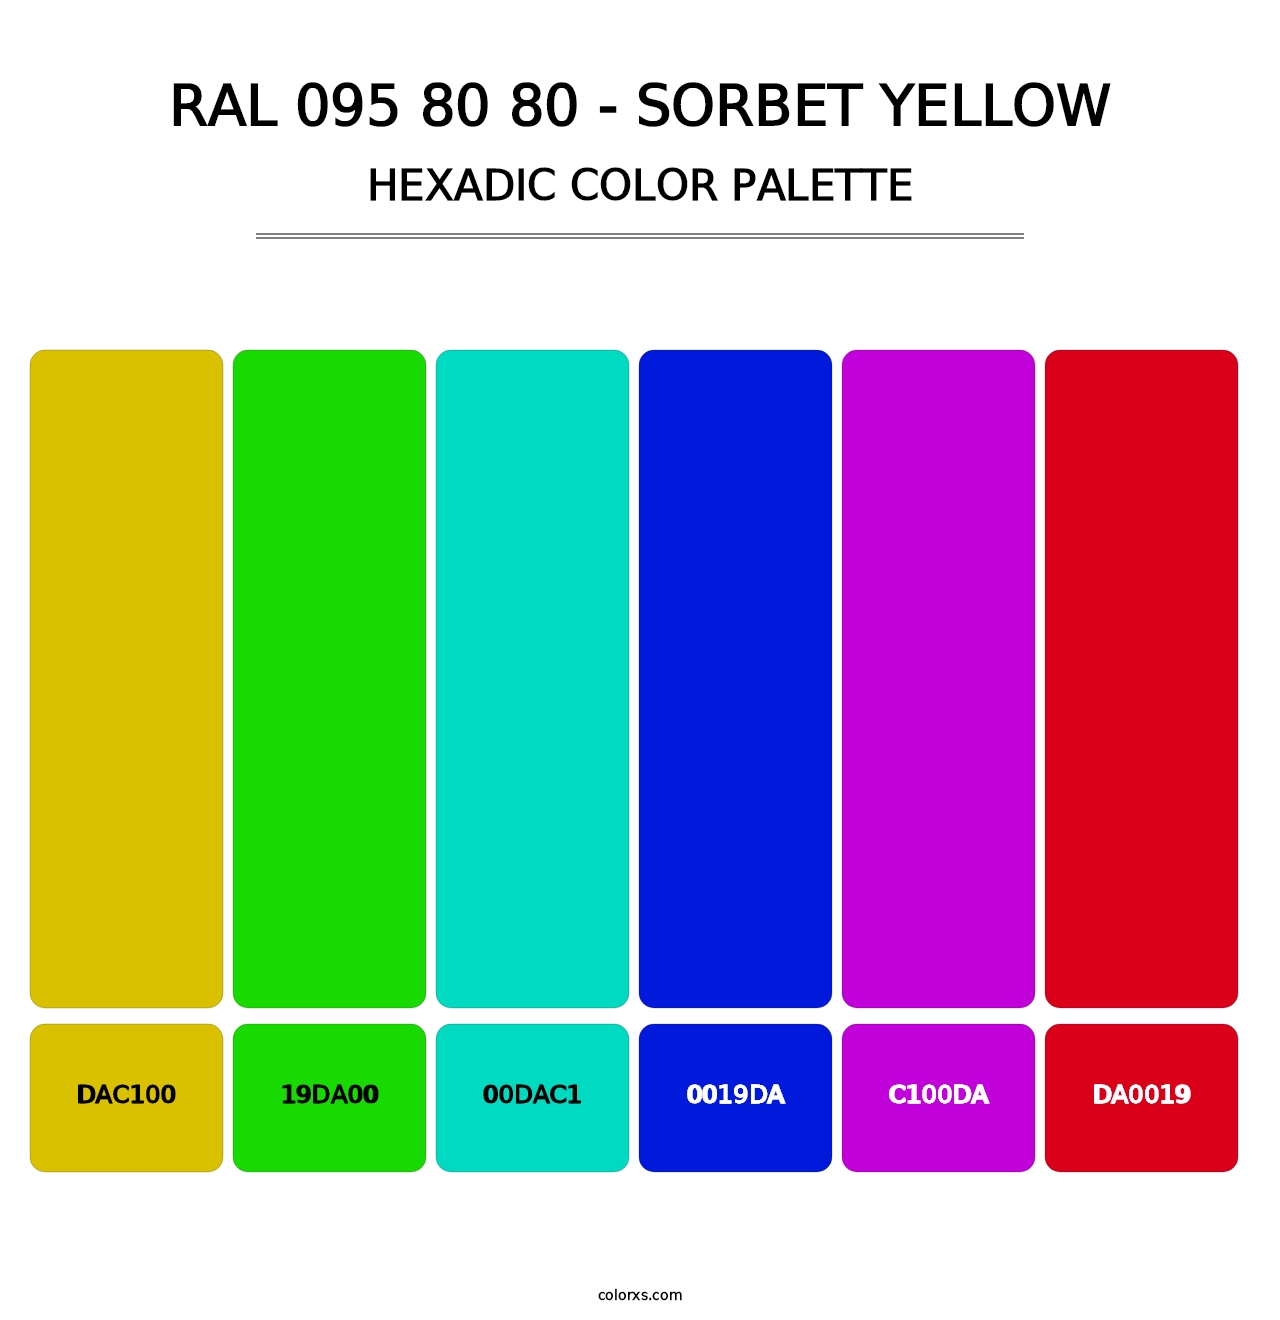 RAL 095 80 80 - Sorbet Yellow - Hexadic Color Palette